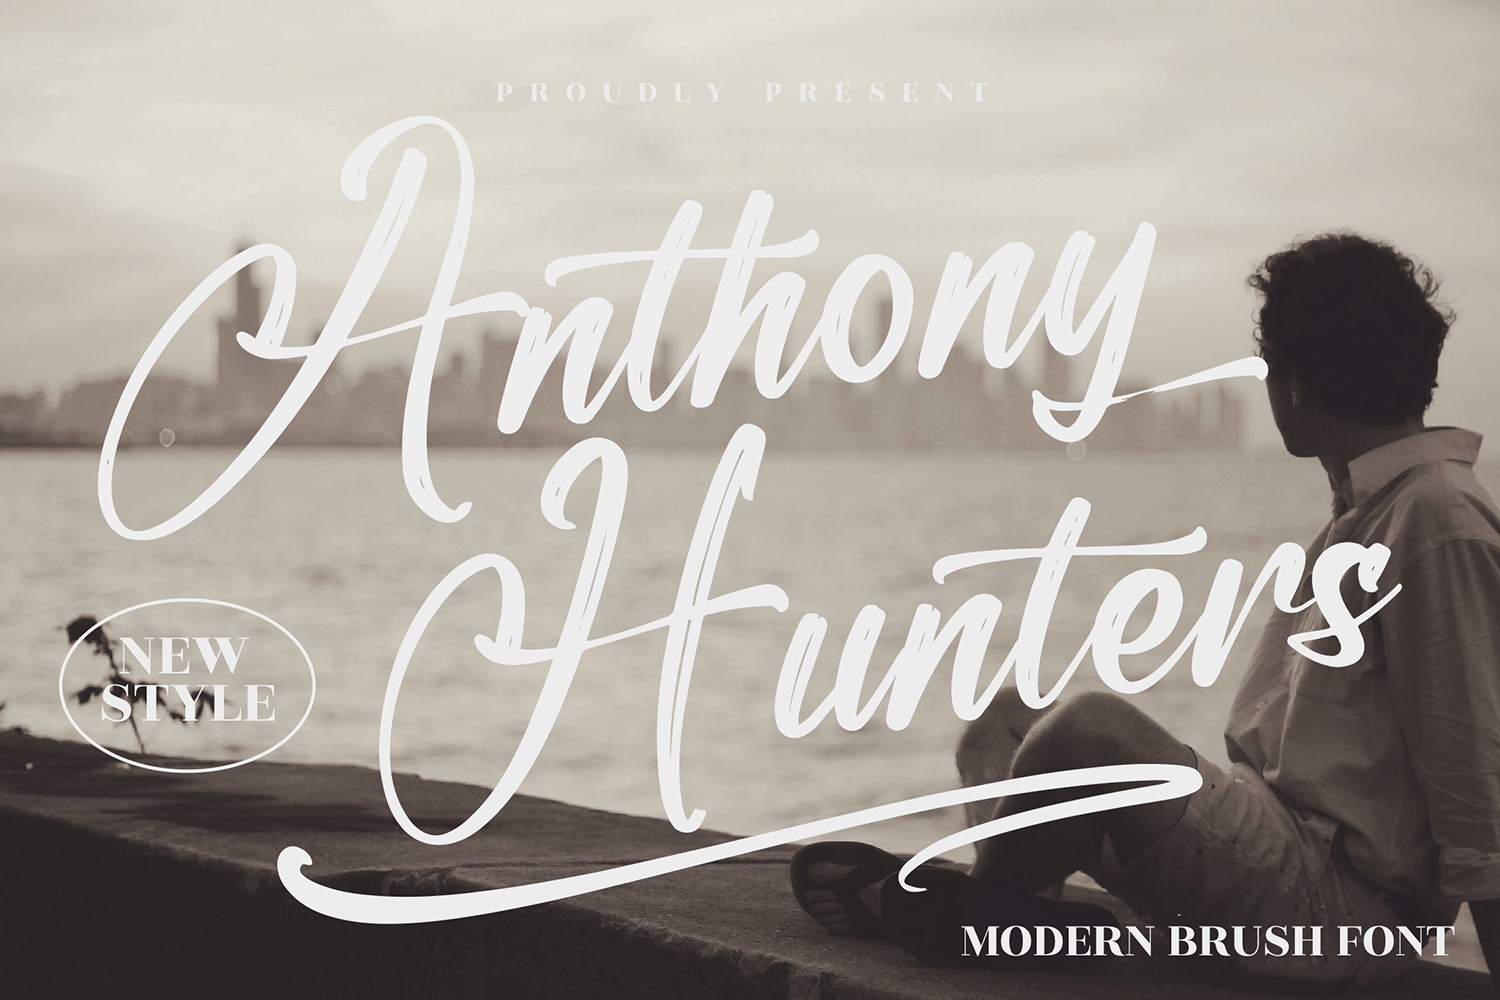 Anthony Hunters Free Font